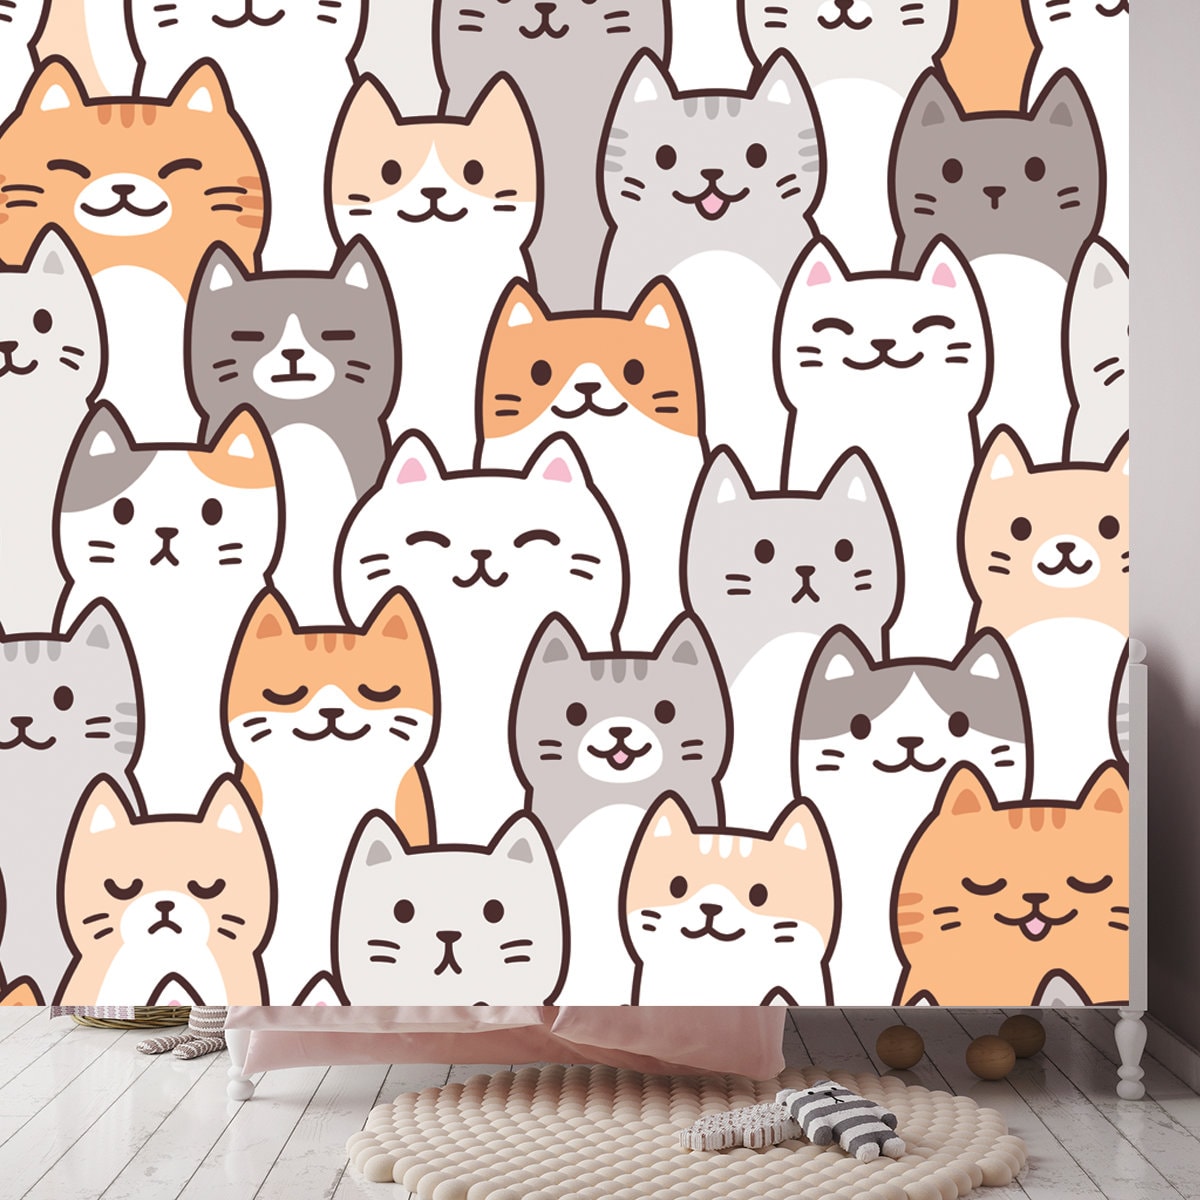 Cute Cartoon Doodle Cats Pattern. Kawaii Crowd of Cat Faces Wallpaper Girl Bedroom Mural